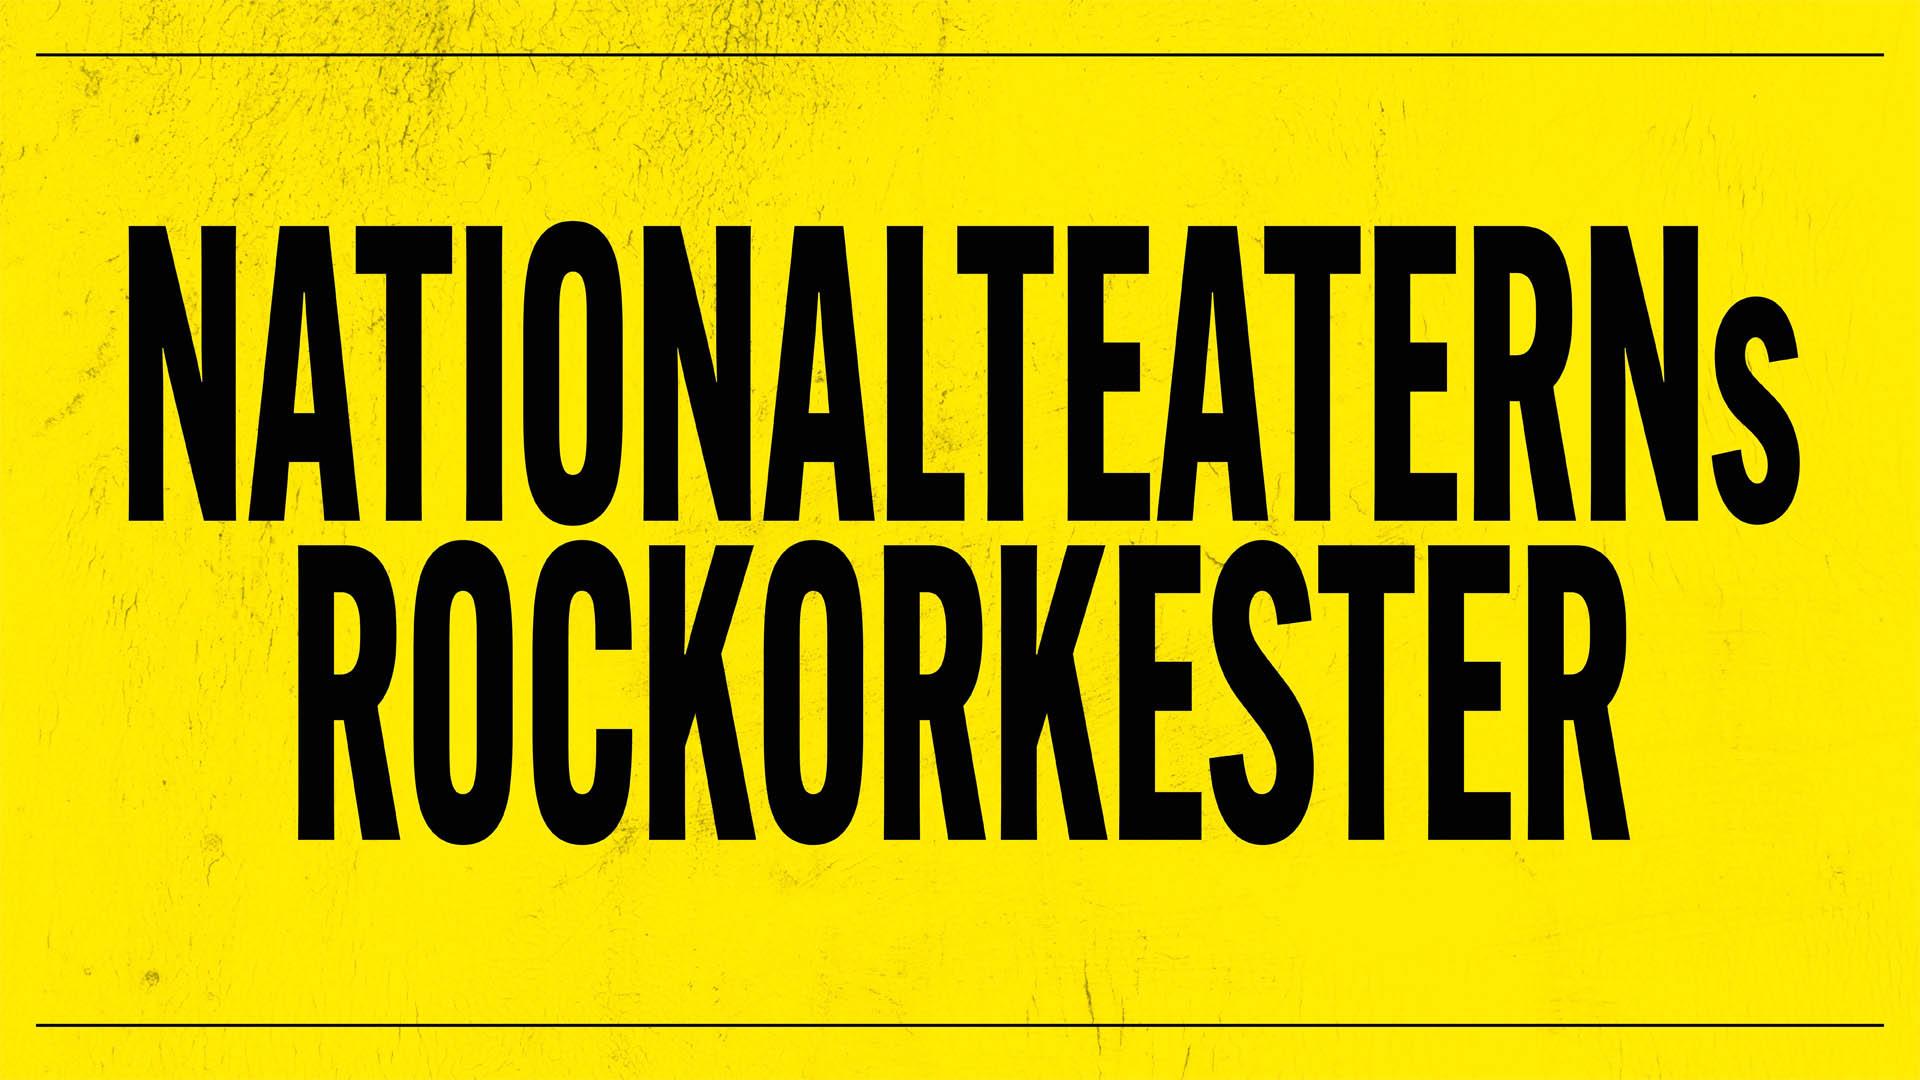 Nationalteaterns Rockorkester turne